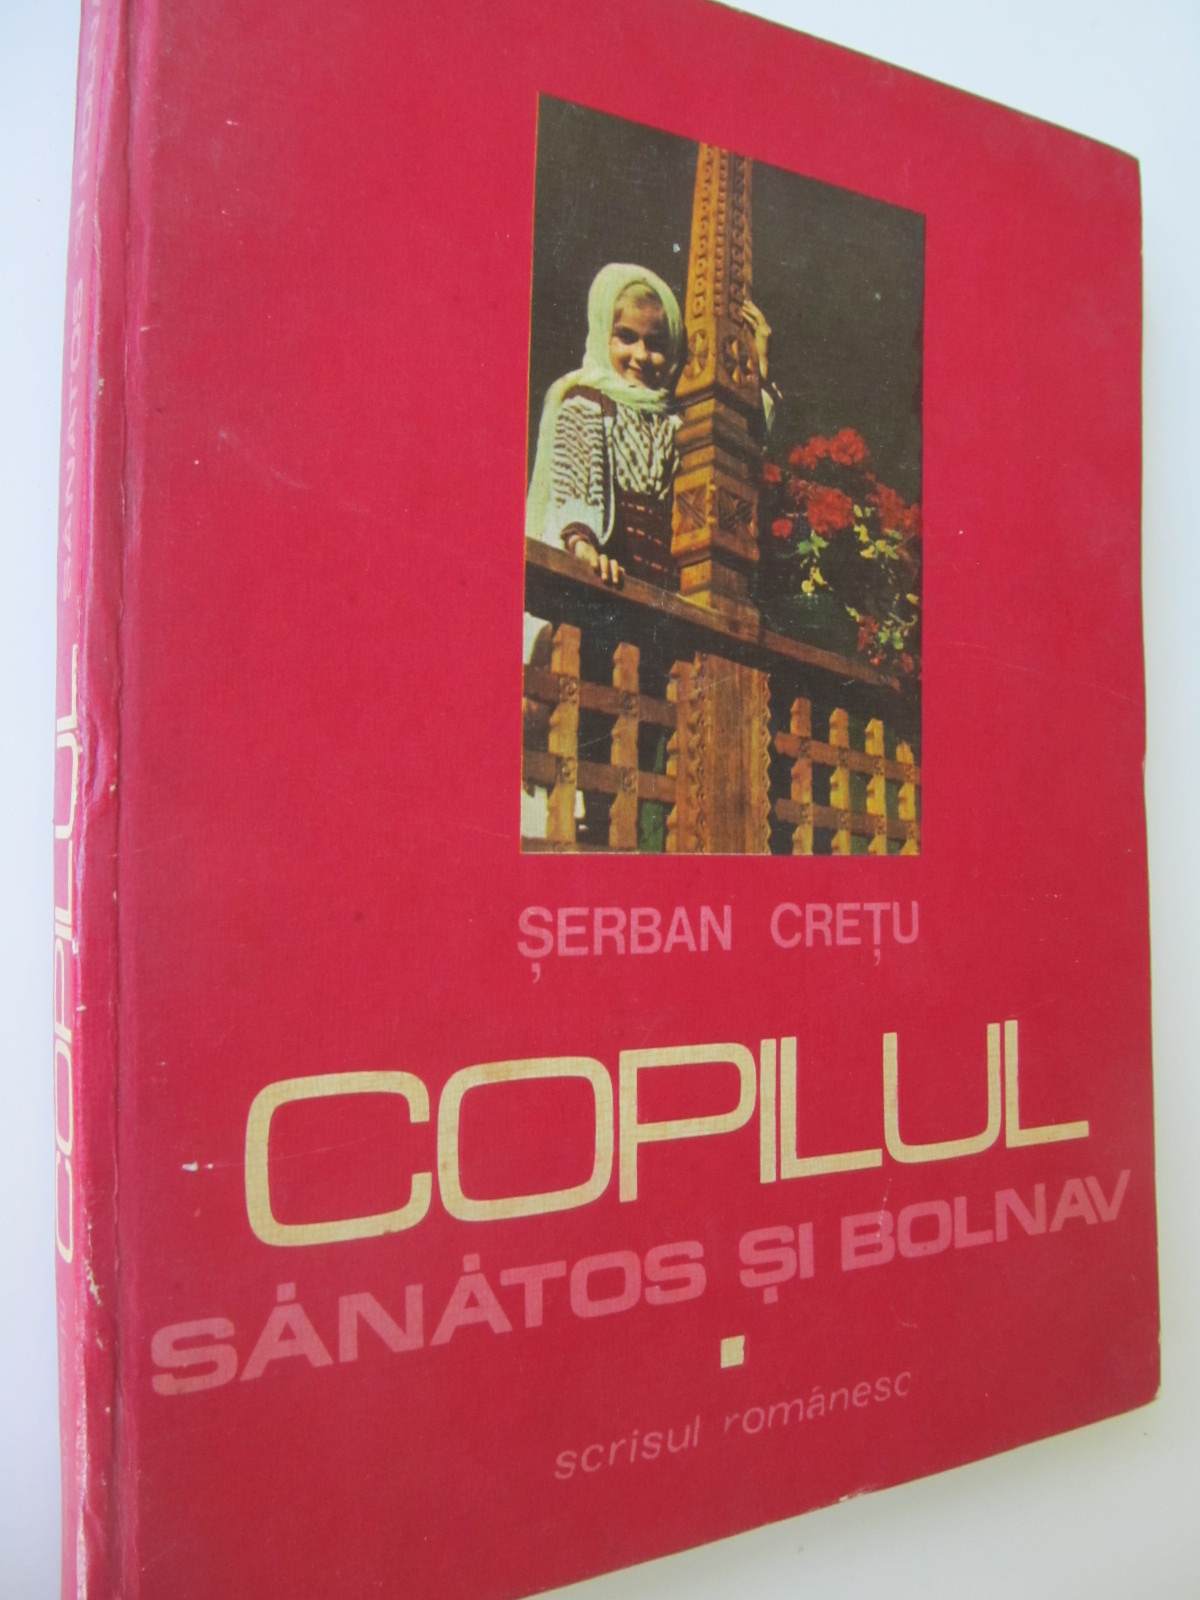 Copilul sanatos si bolnav (vol. 1) - Serban Cretu | Detalii carte